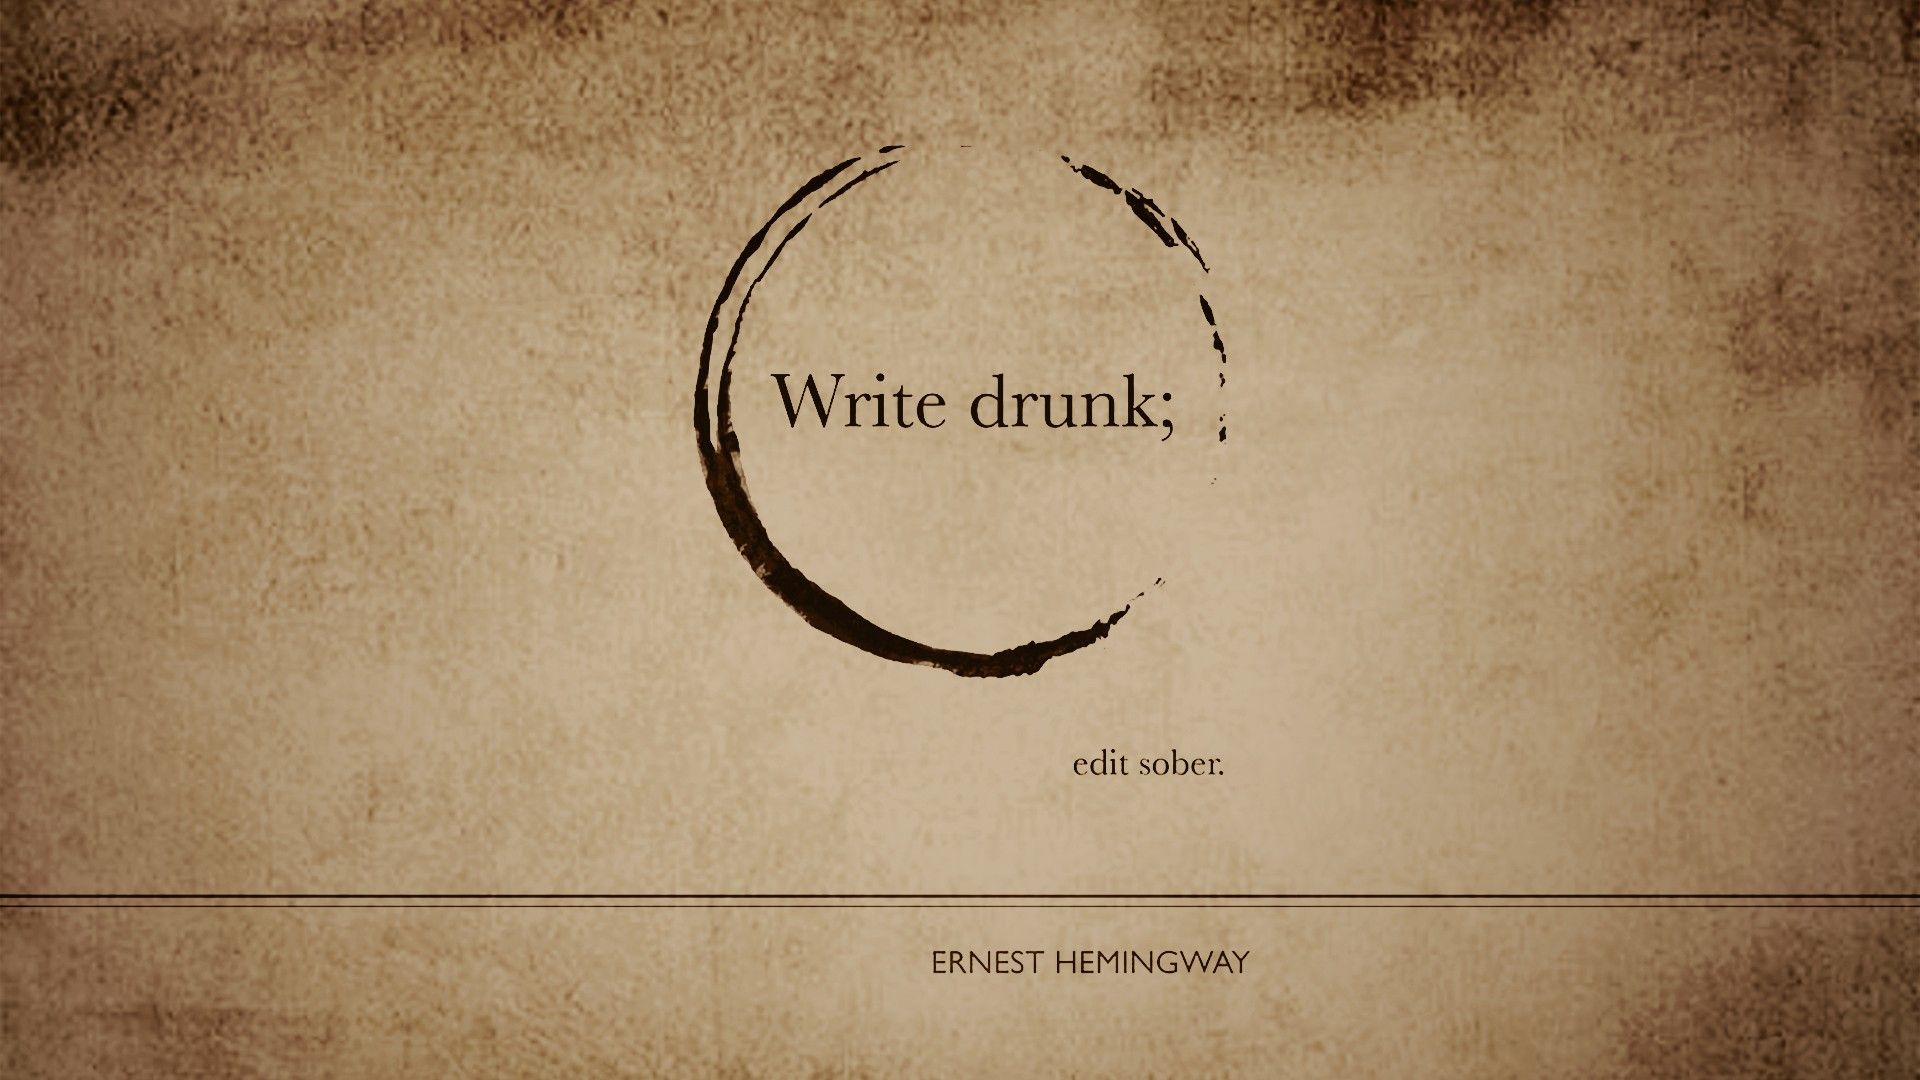 Ernest Hemingway, Book quotes, Artwork, Quote, Misattributed